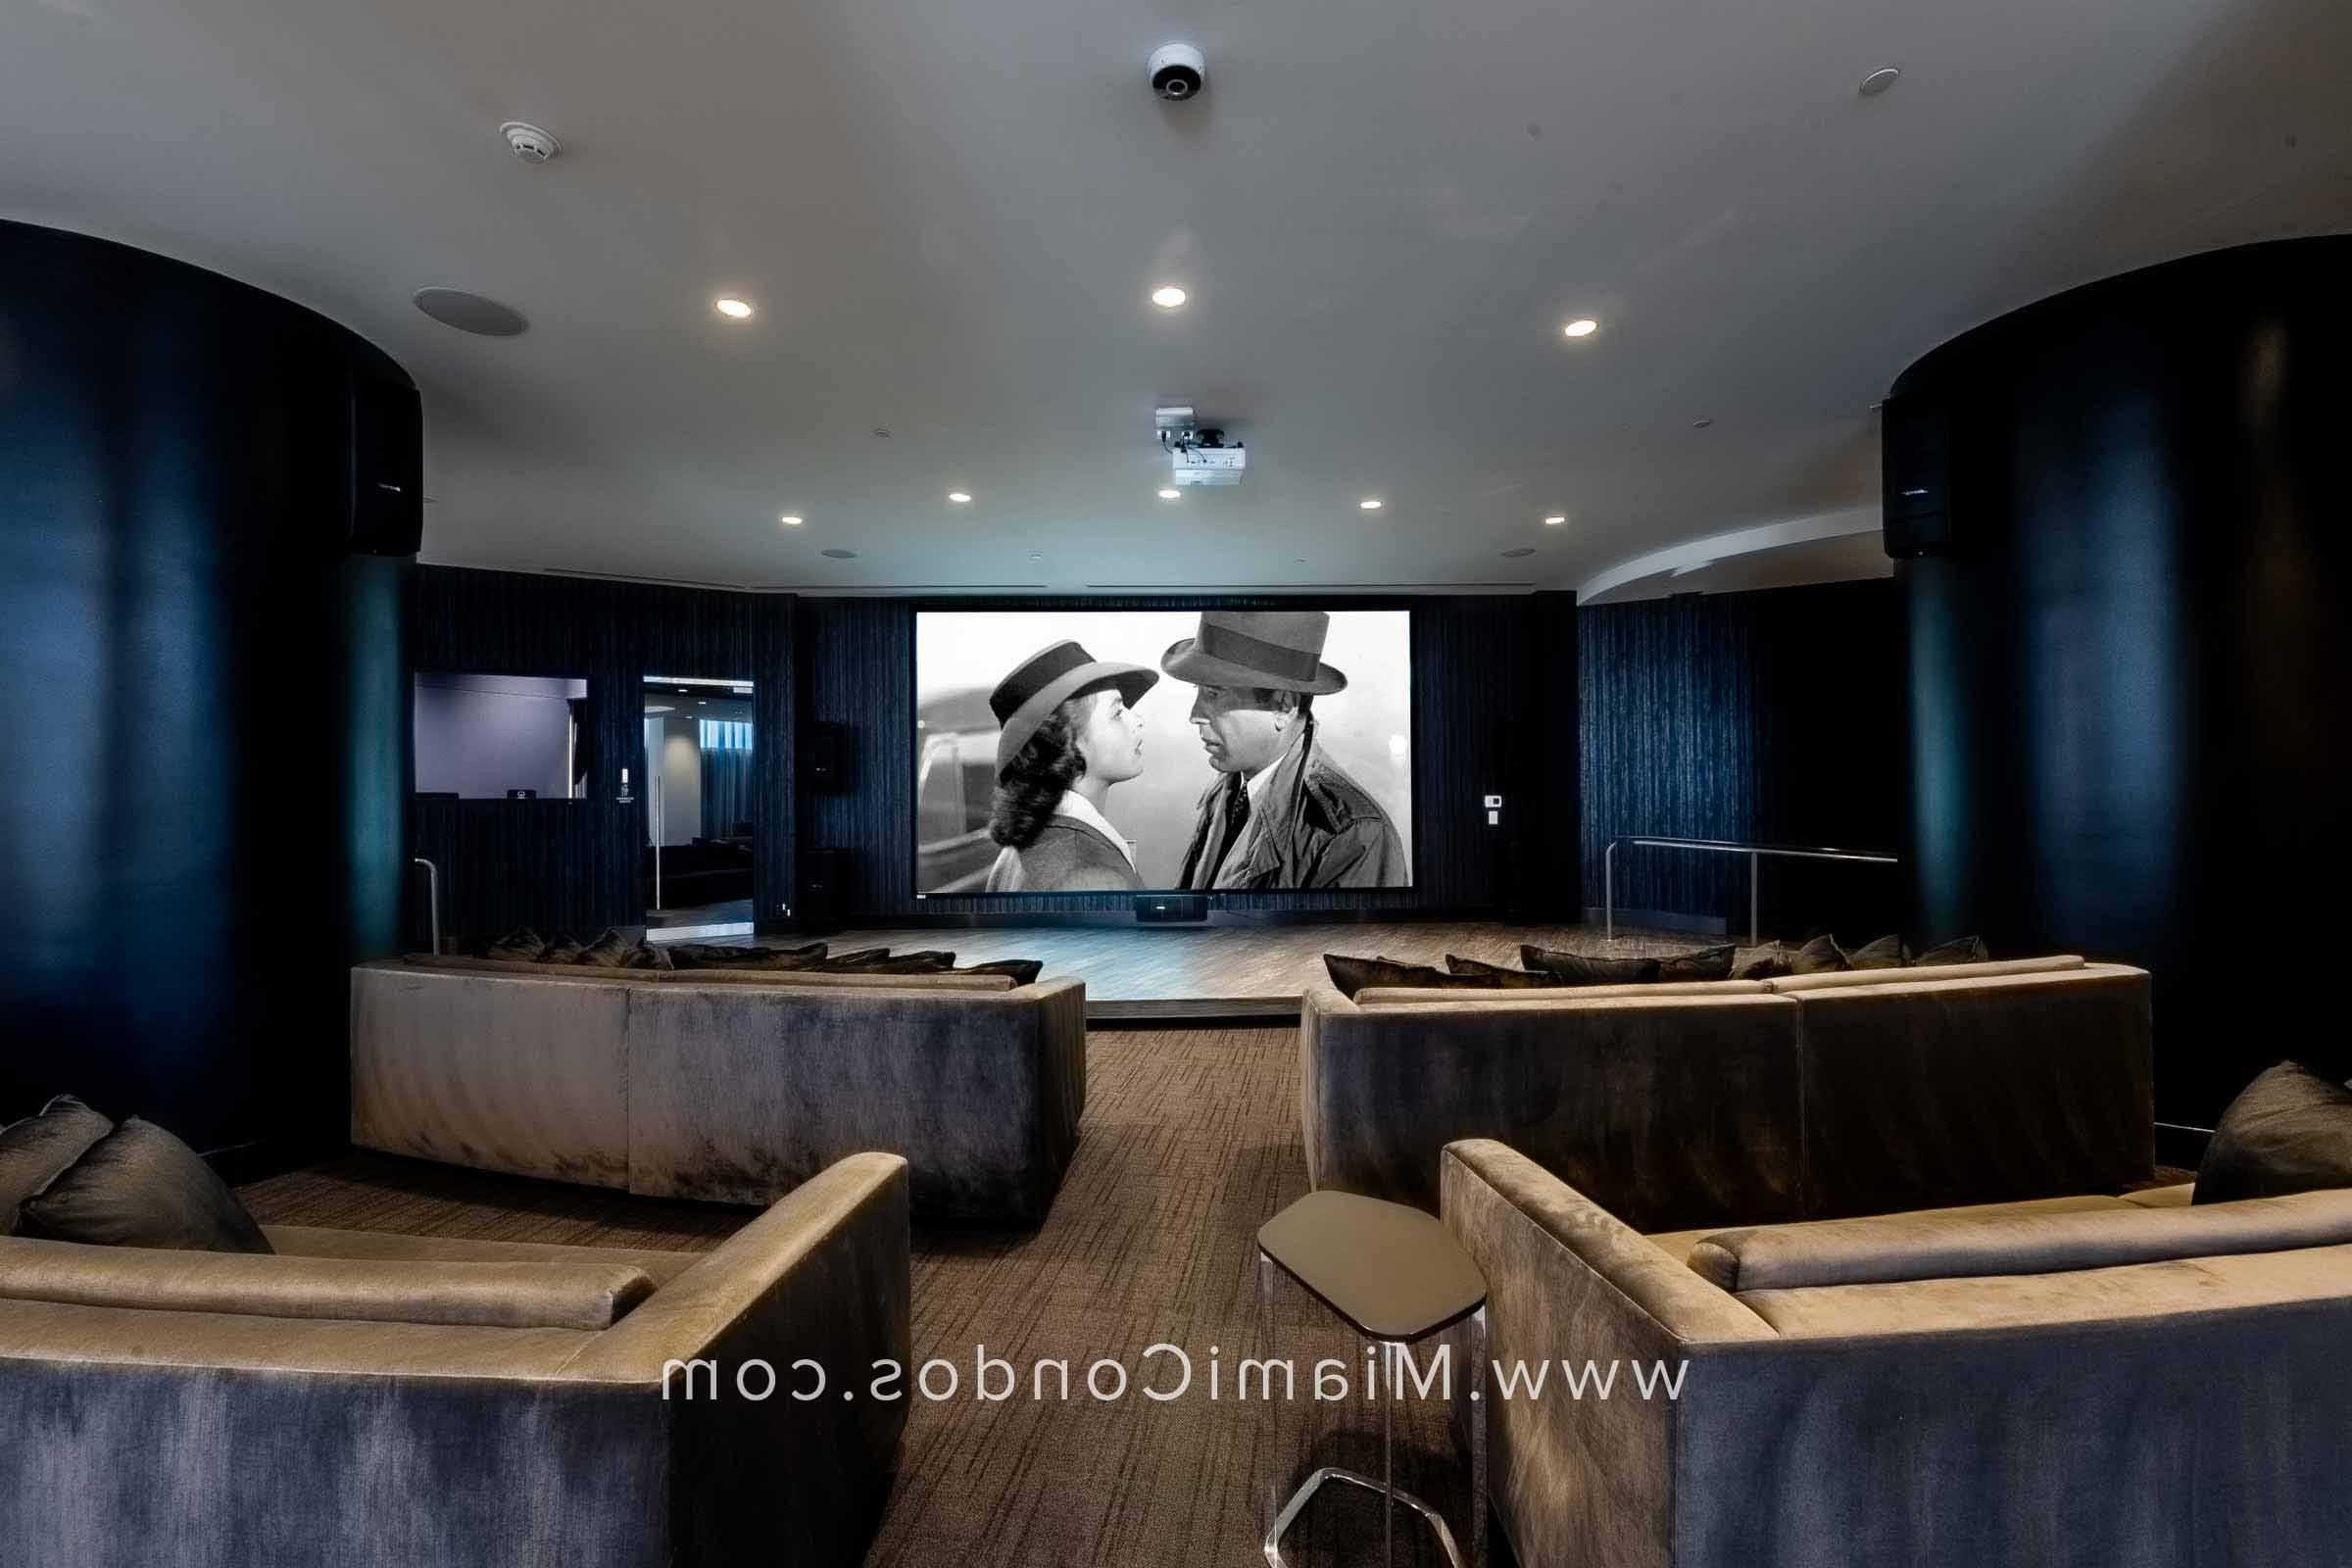 Paramount Miami Worldcenter Movie Theater